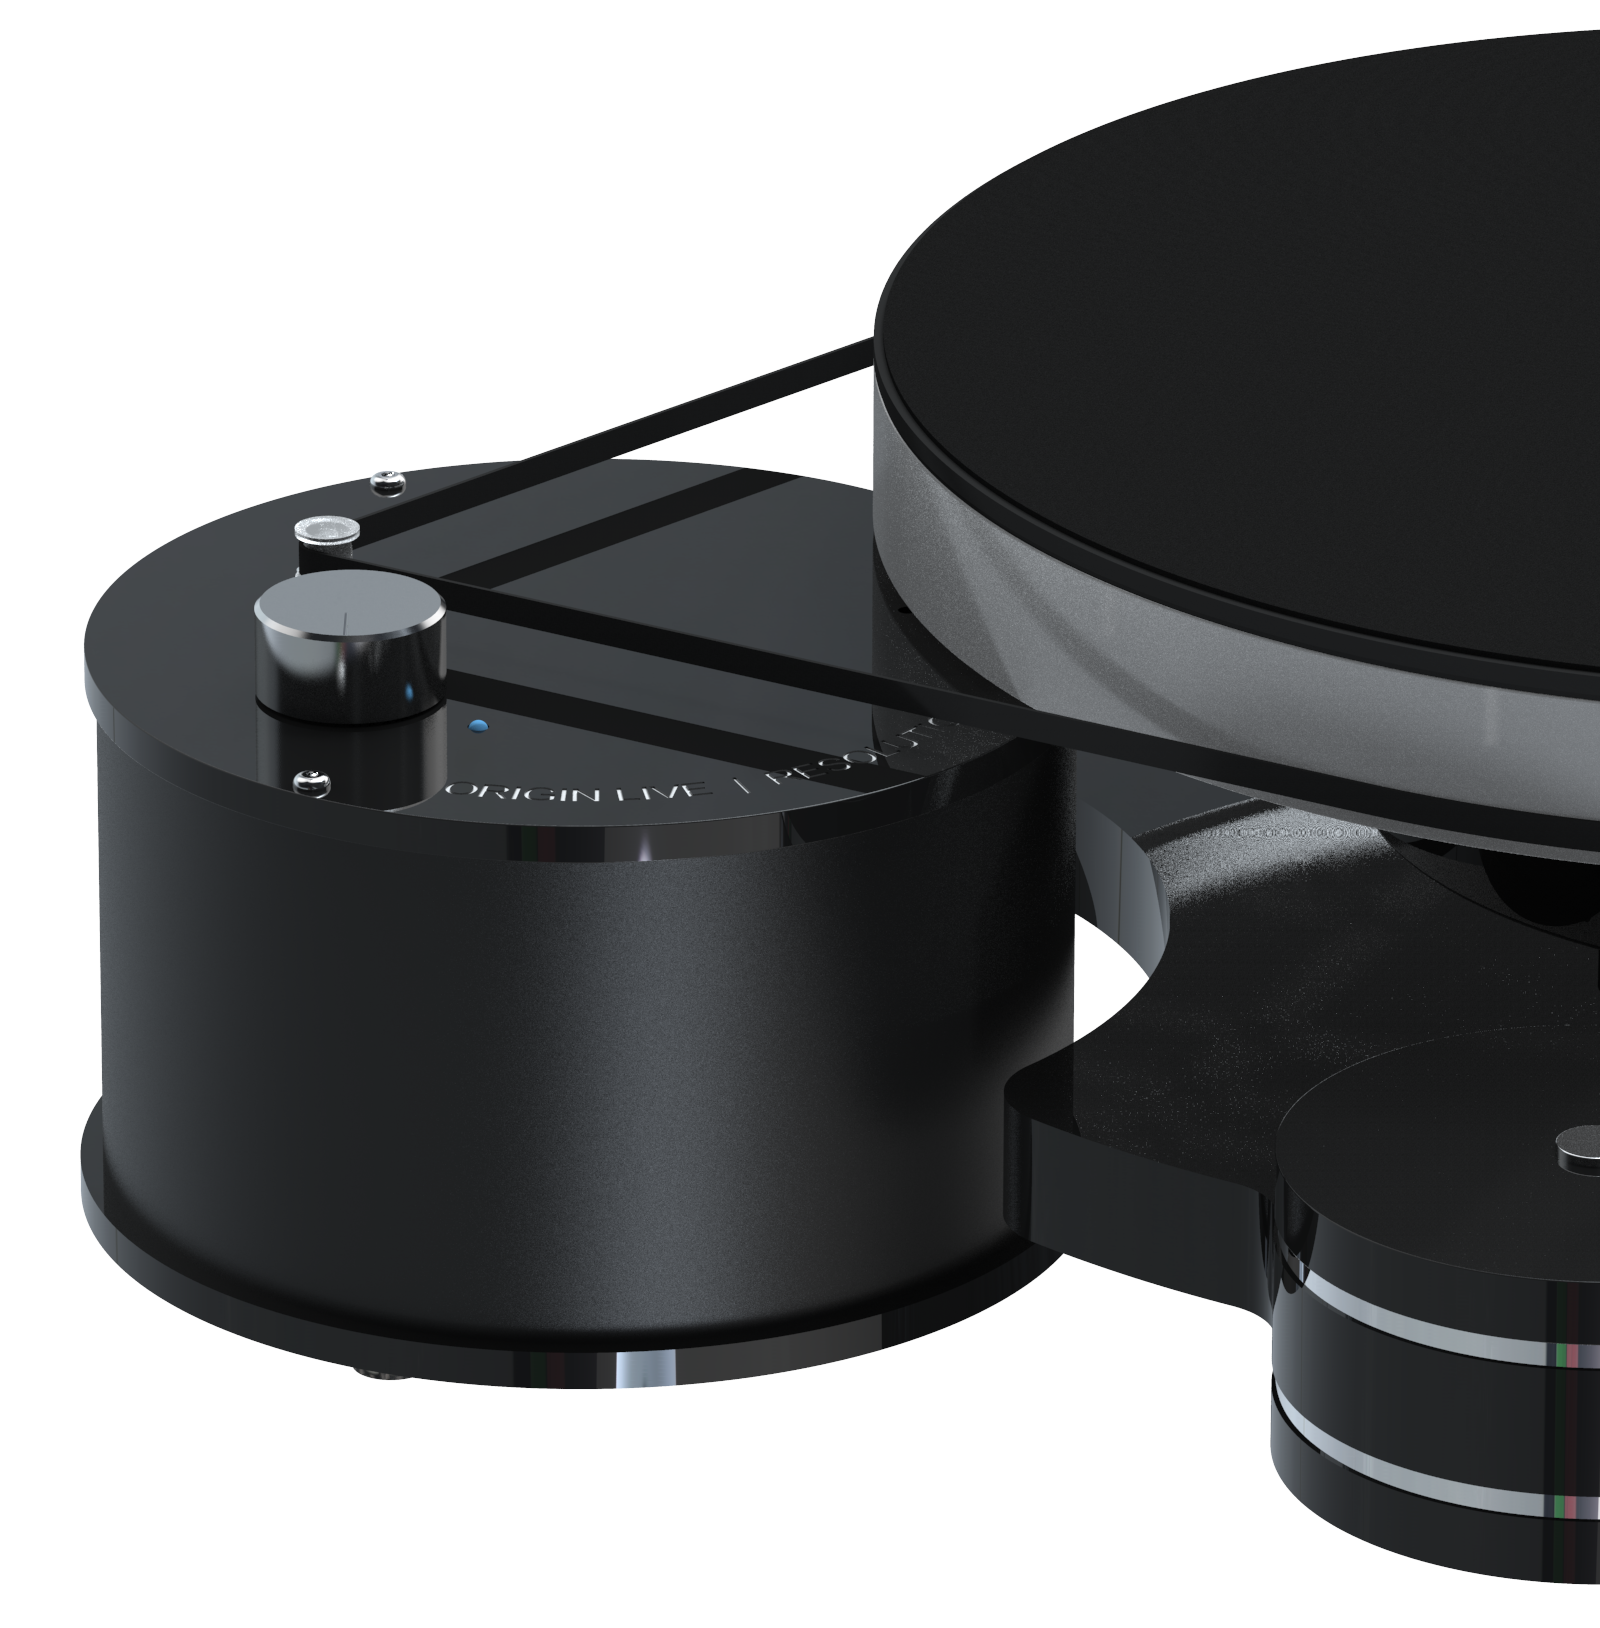 Origin Live Hi-Fi Resolution Turntable motor pod, belt drive Audio audiophile affordable high end hifi